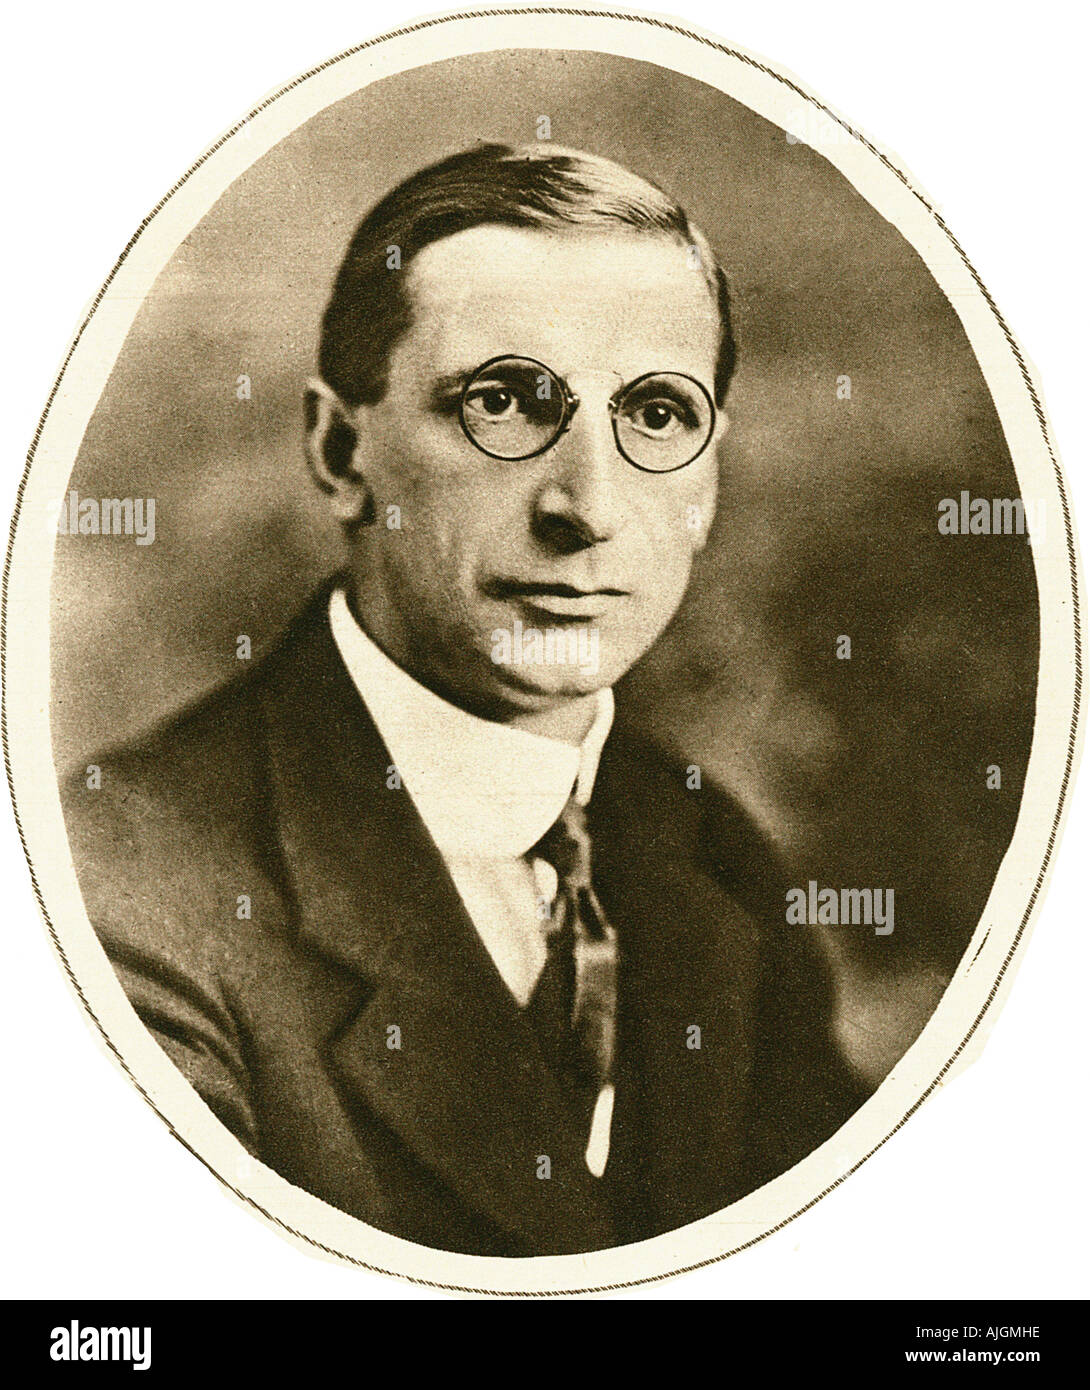 Eamon De Valera, 1920 portrait of the Irish republican politician and statesman, later Prime Minister and President Stock Photo